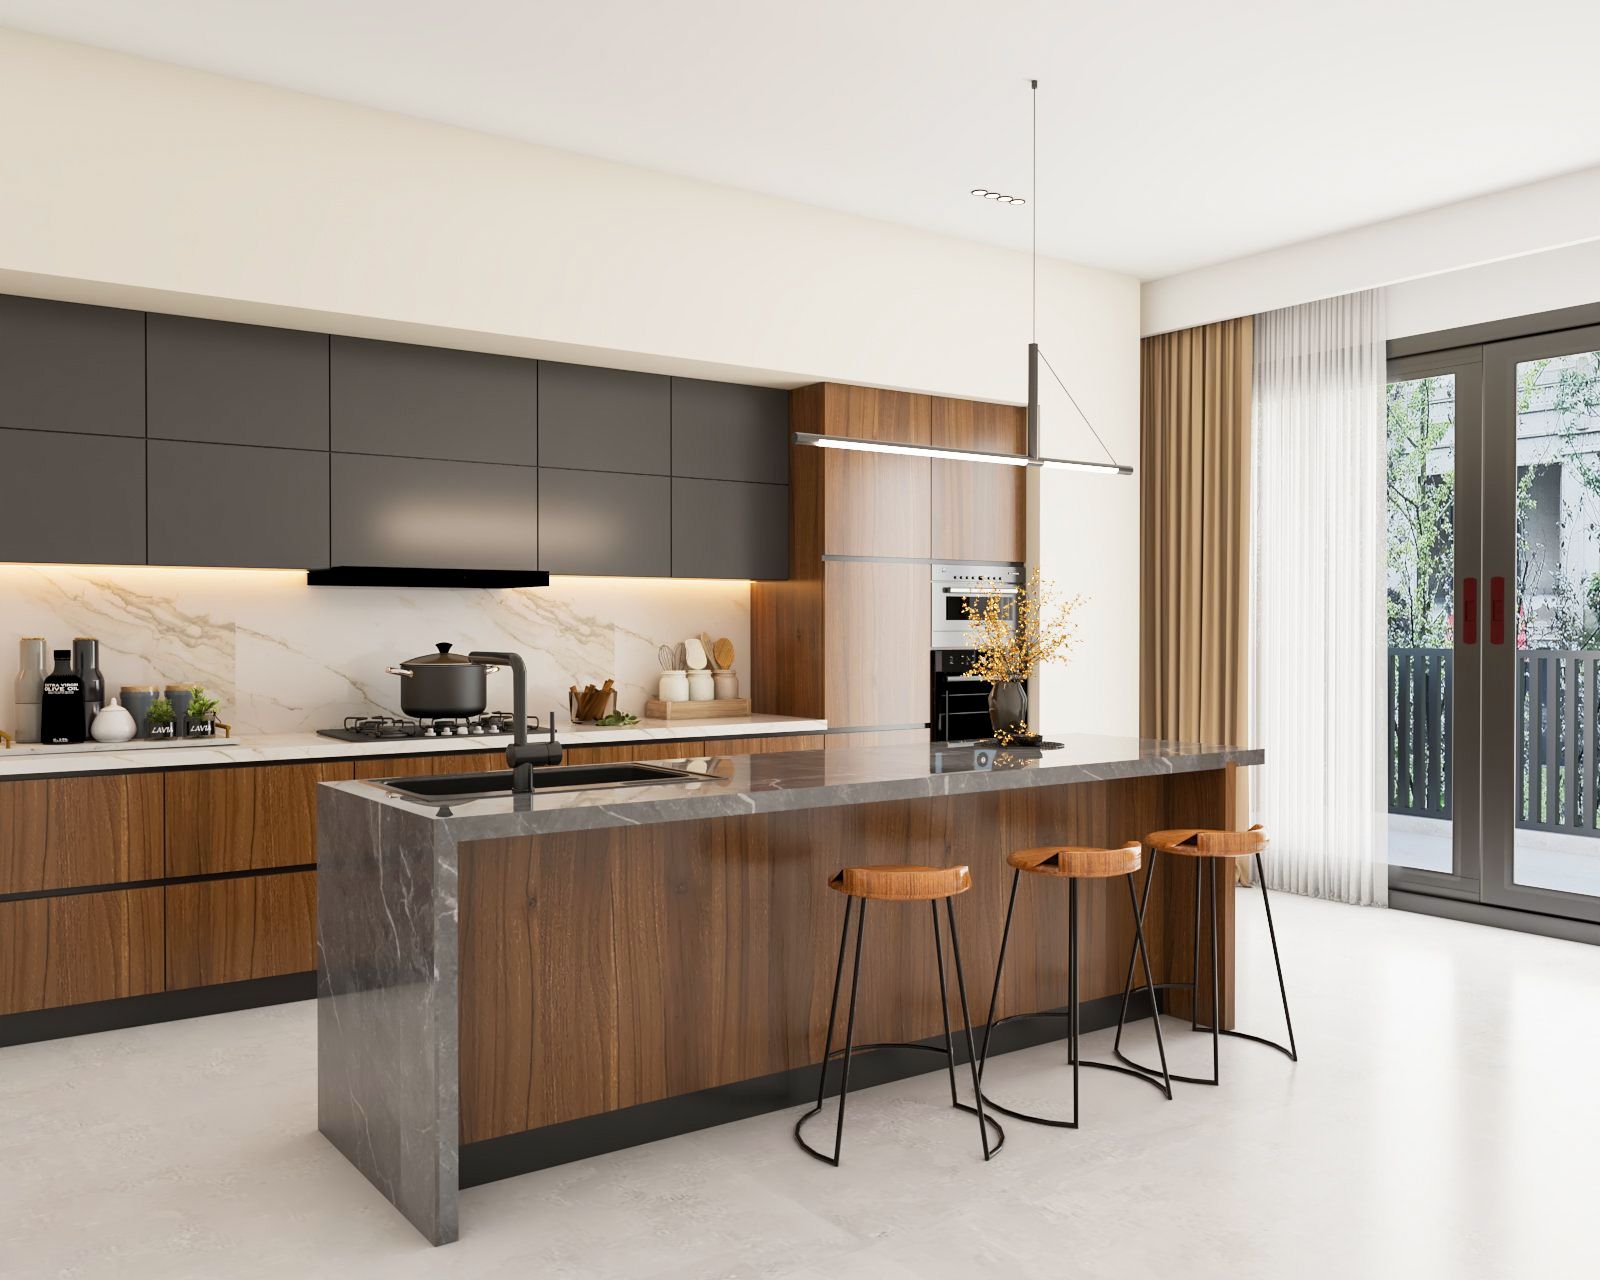 Industrial Regalia Dark Grey And Wood Modular Island Kitchen Design With Marble Countertop